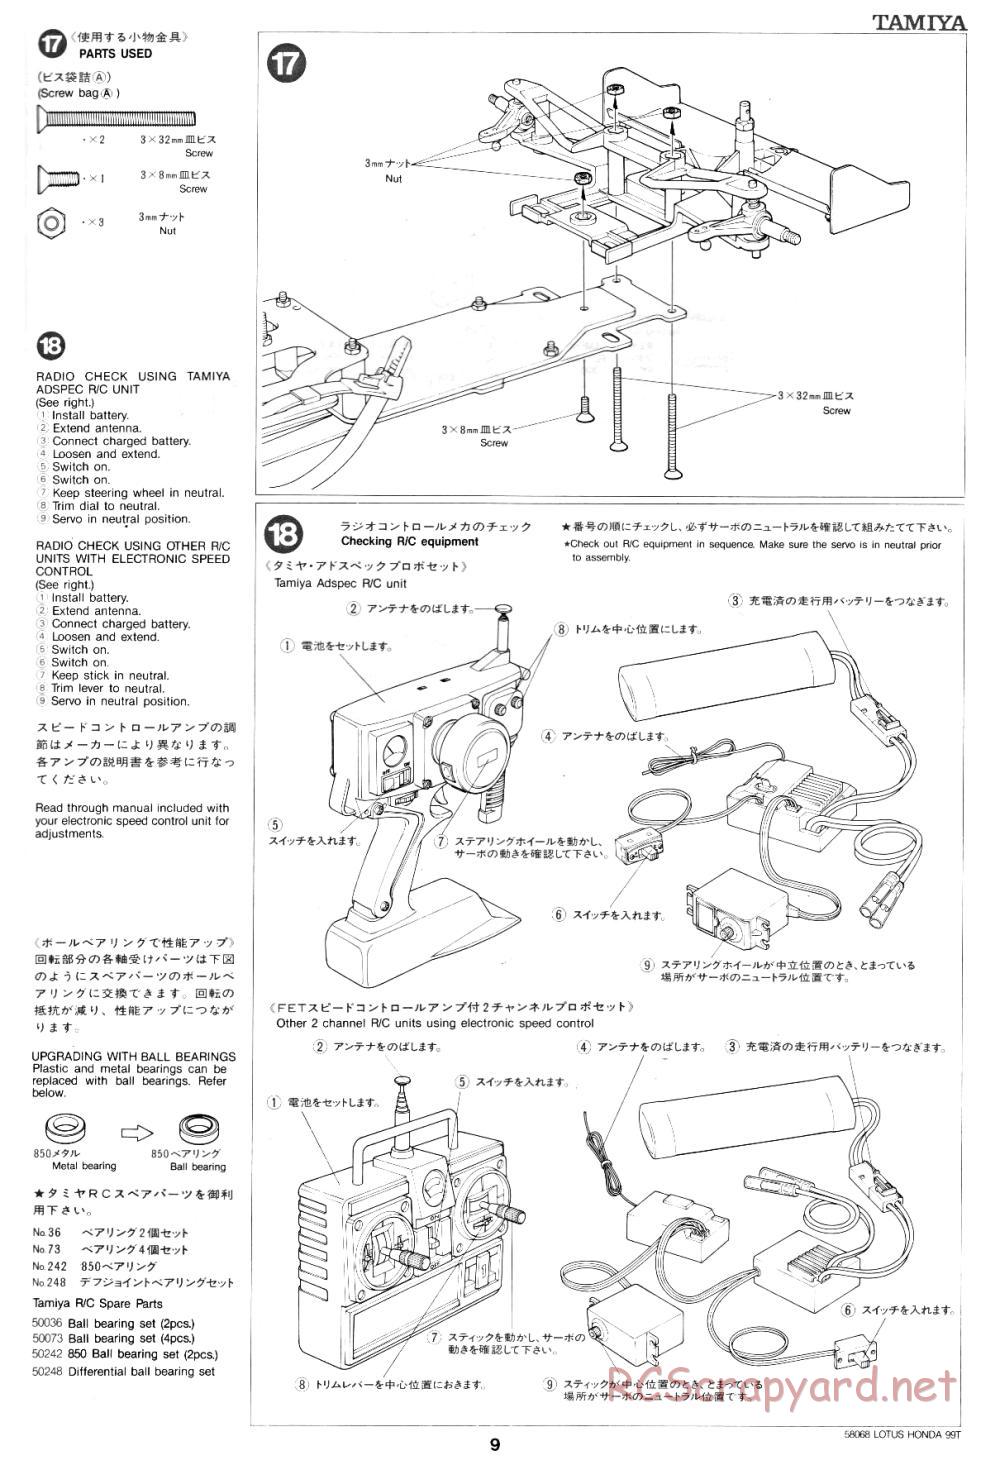 Tamiya - Lotus Honda 99T - 58068 - Manual - Page 9